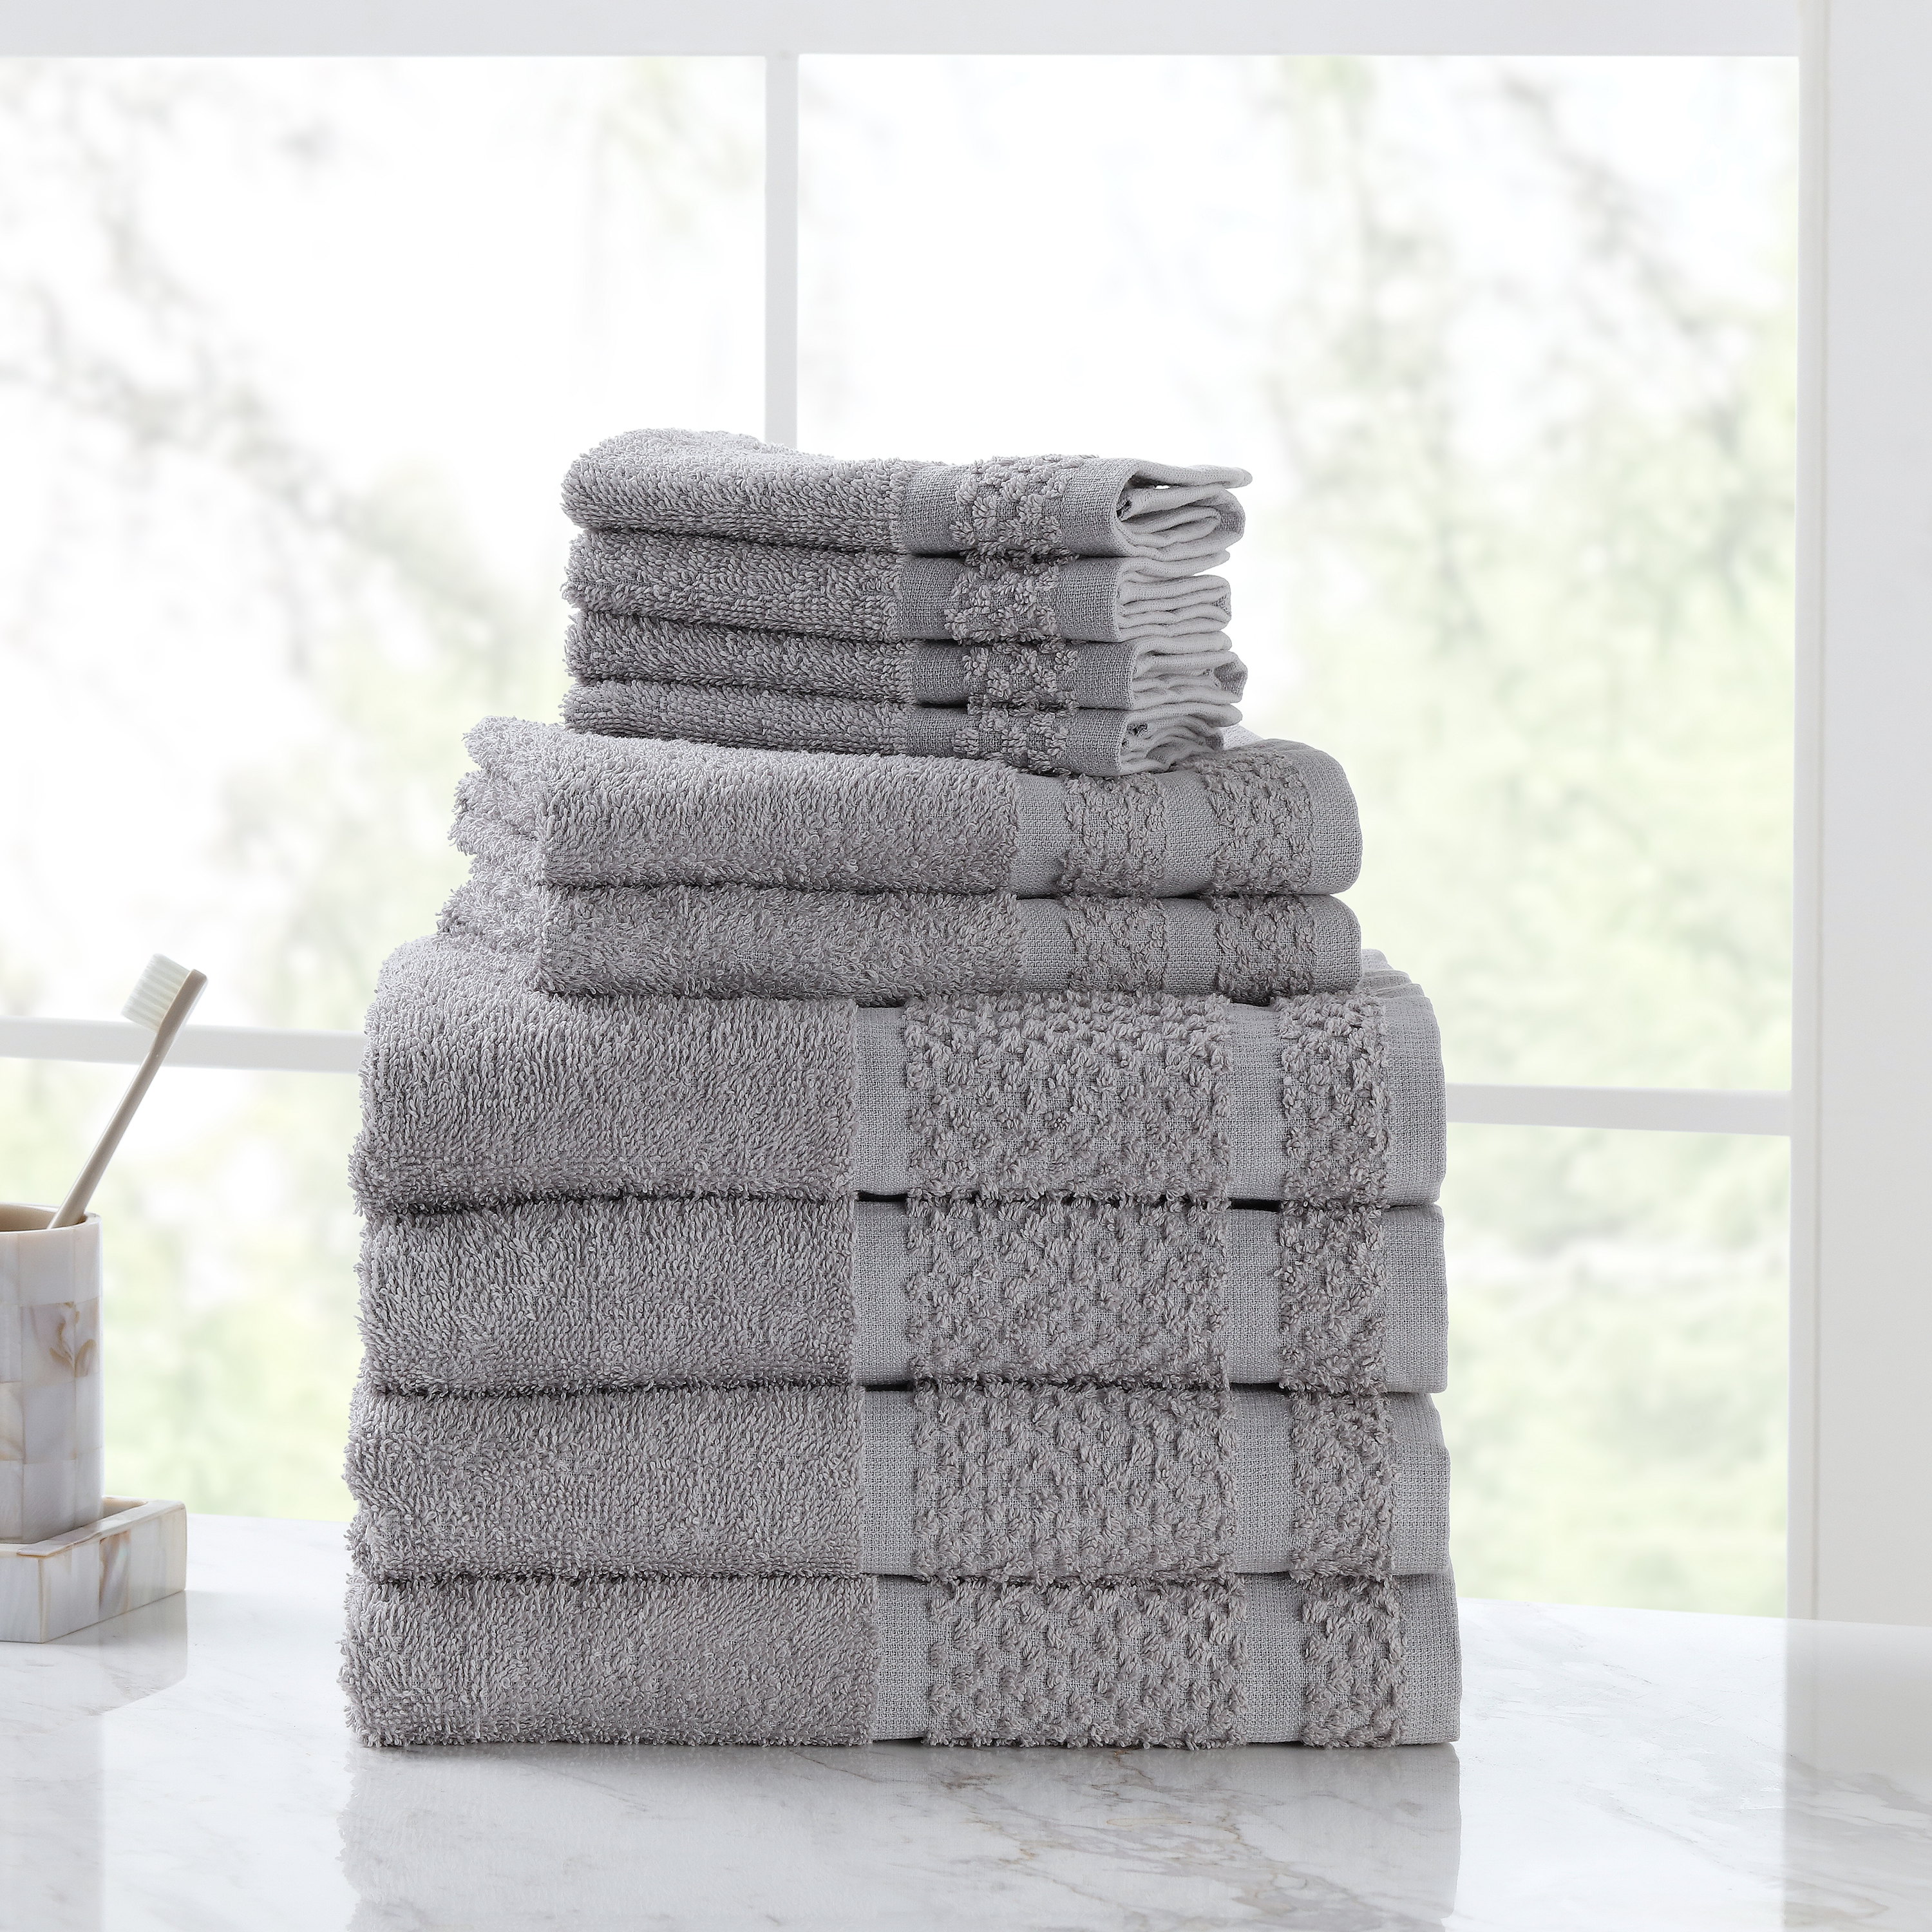 Mainstays 10 Piece Bath Towel Set with Upgraded Softness & Durability, Gray - image 1 of 7